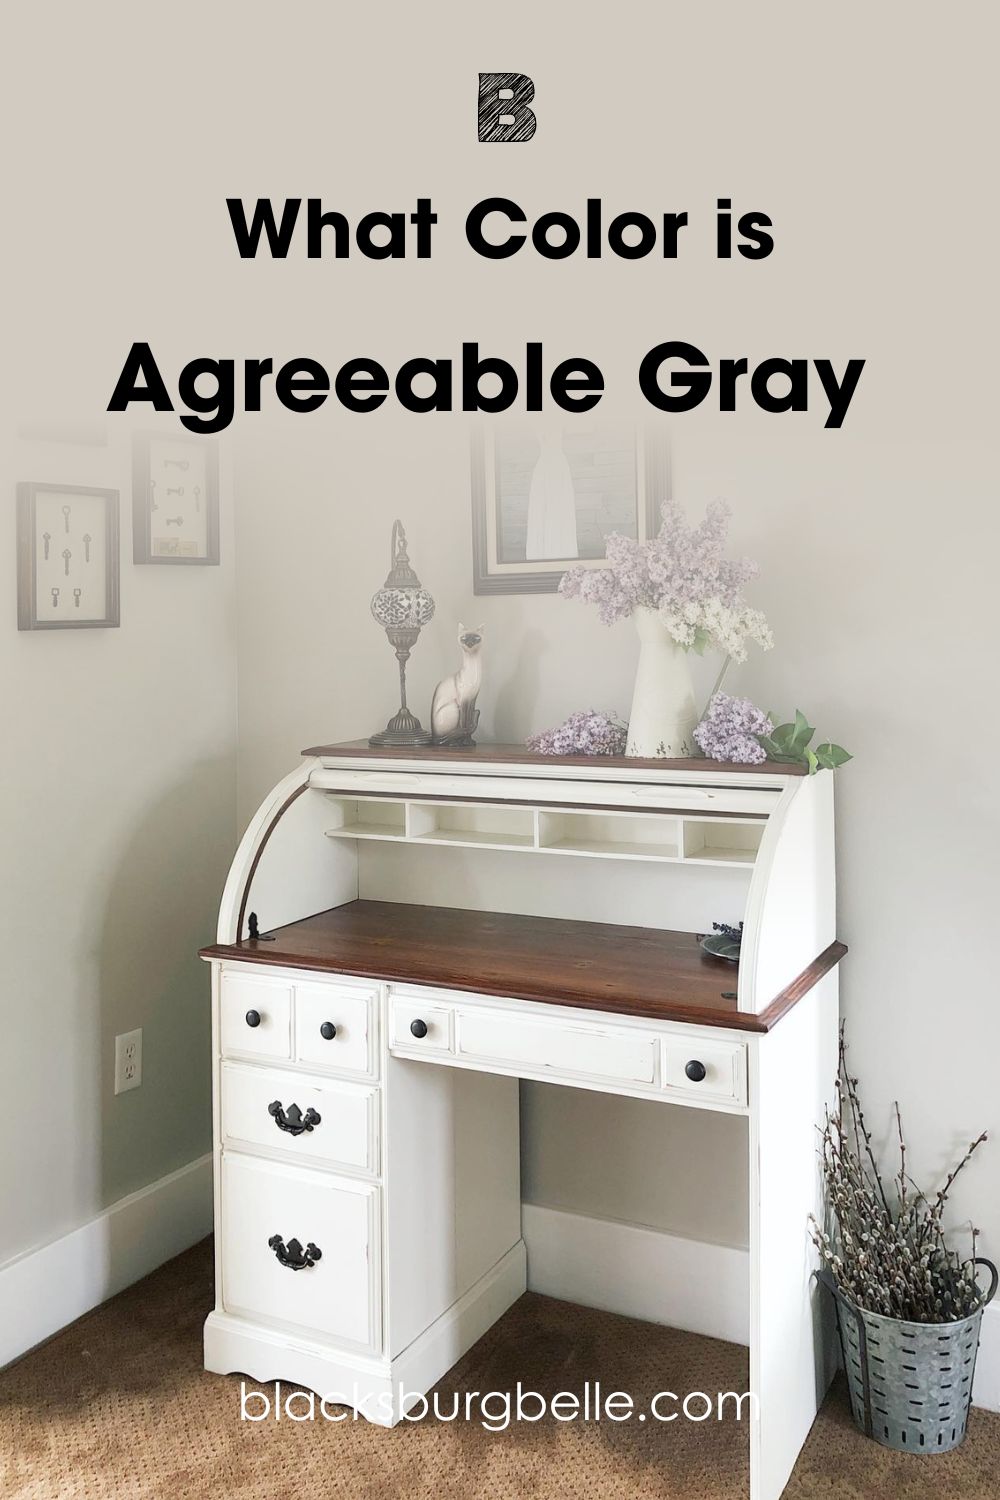 Agreeable Gray(AG)